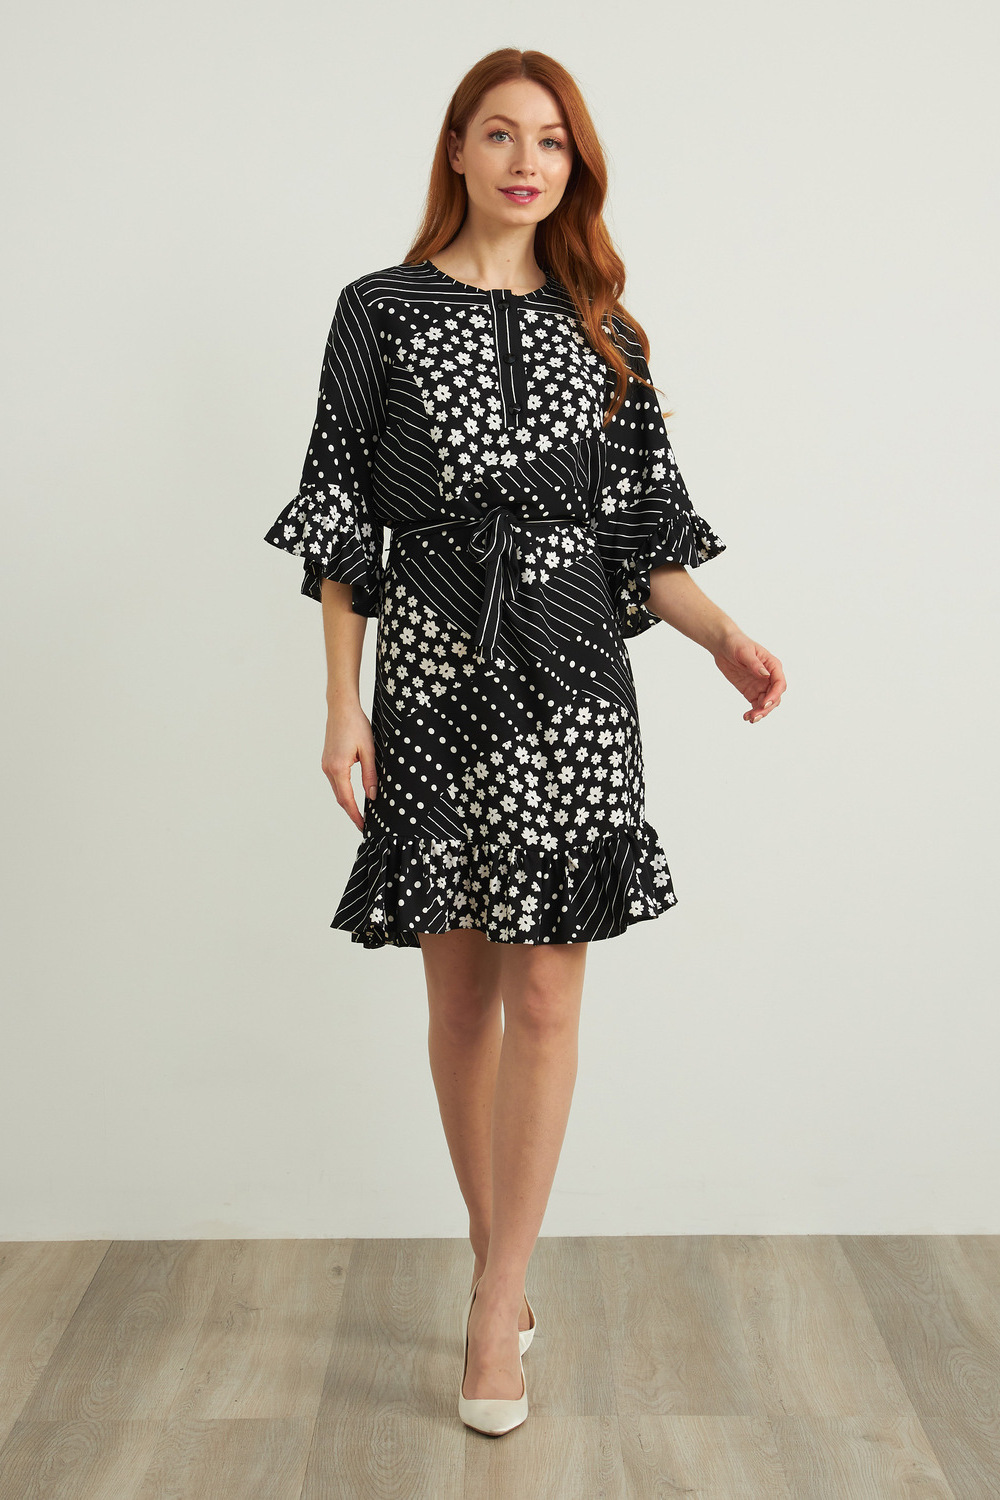 Joseph Ribkoff Printed Shirt Dress Style 212249. Black/white